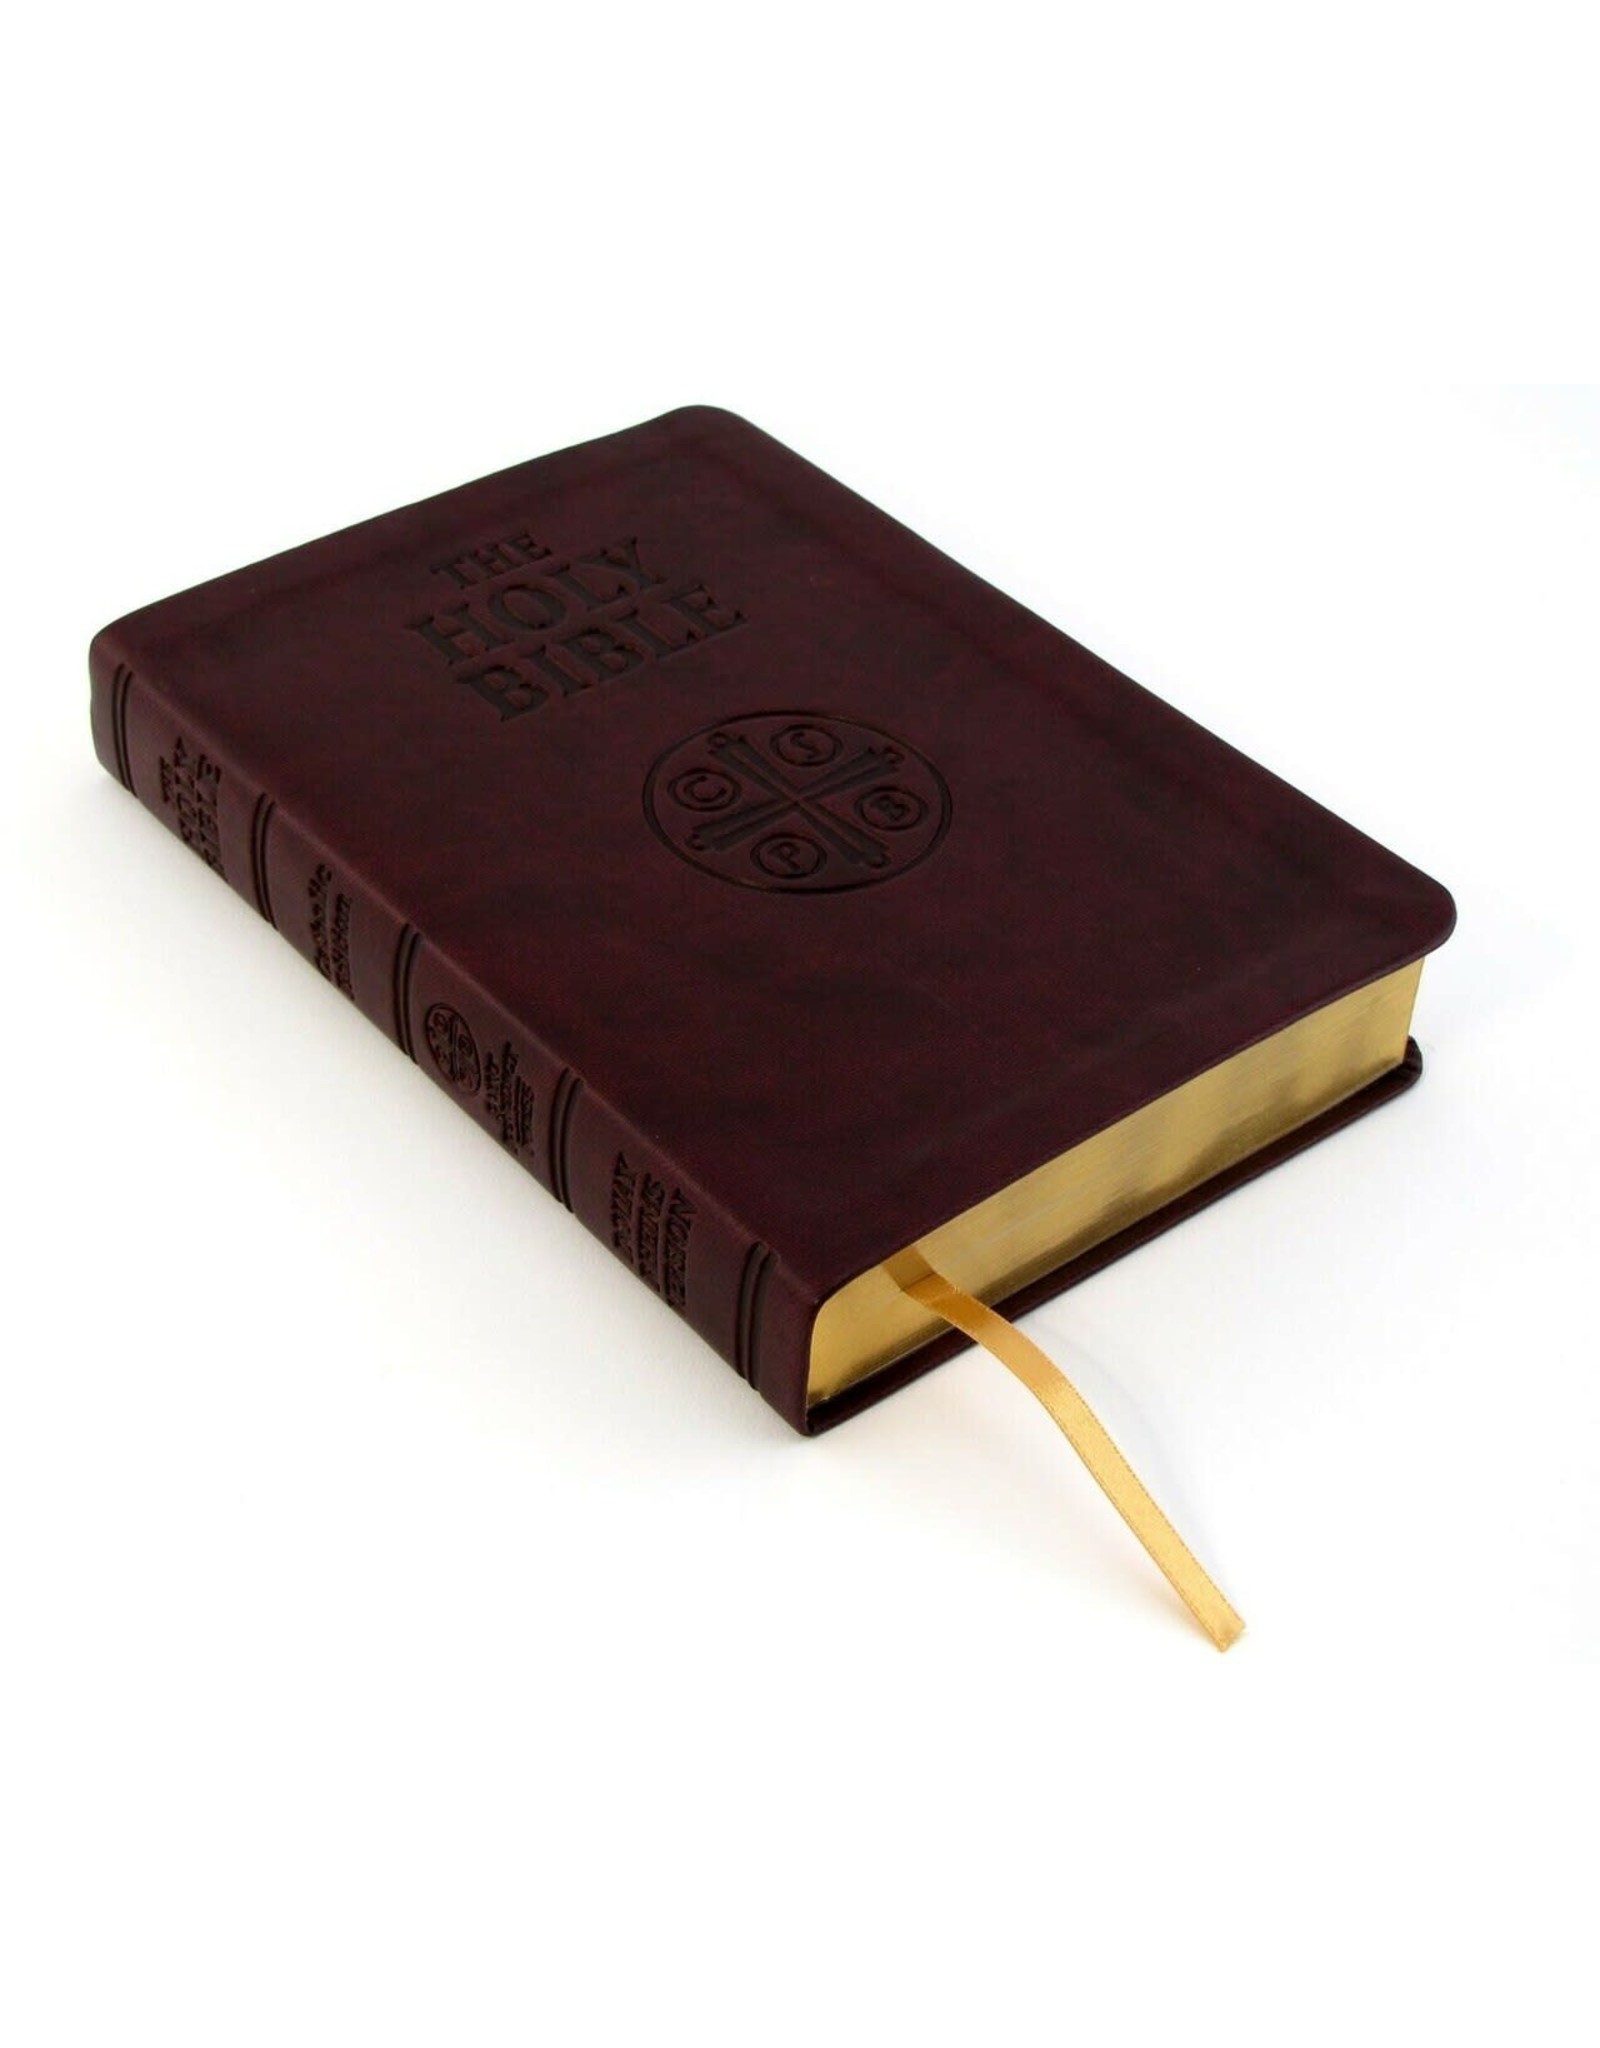 Douay-Rheims Bible (Burgundy Premium UltraSoft Leather): Standard Print Size